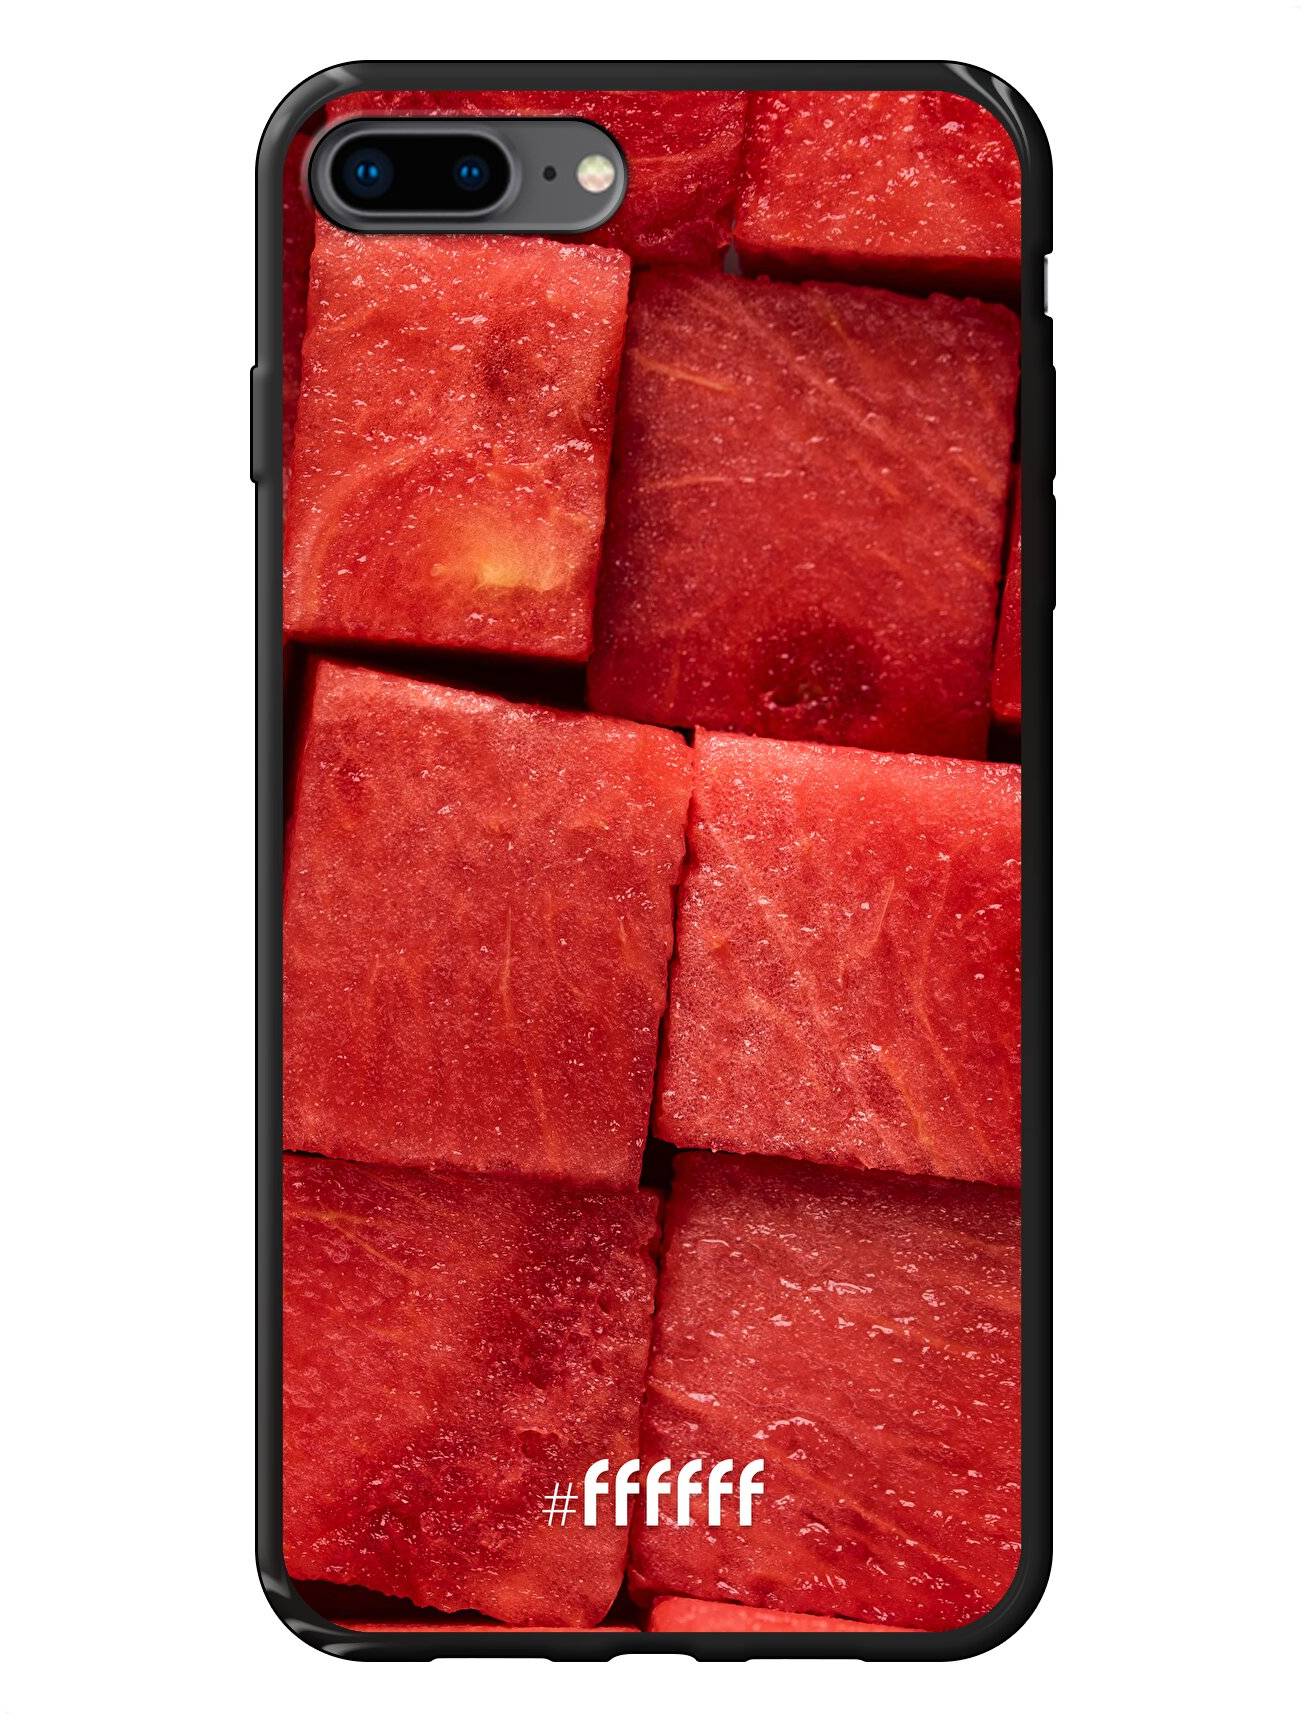 Sweet Melon iPhone 7 Plus